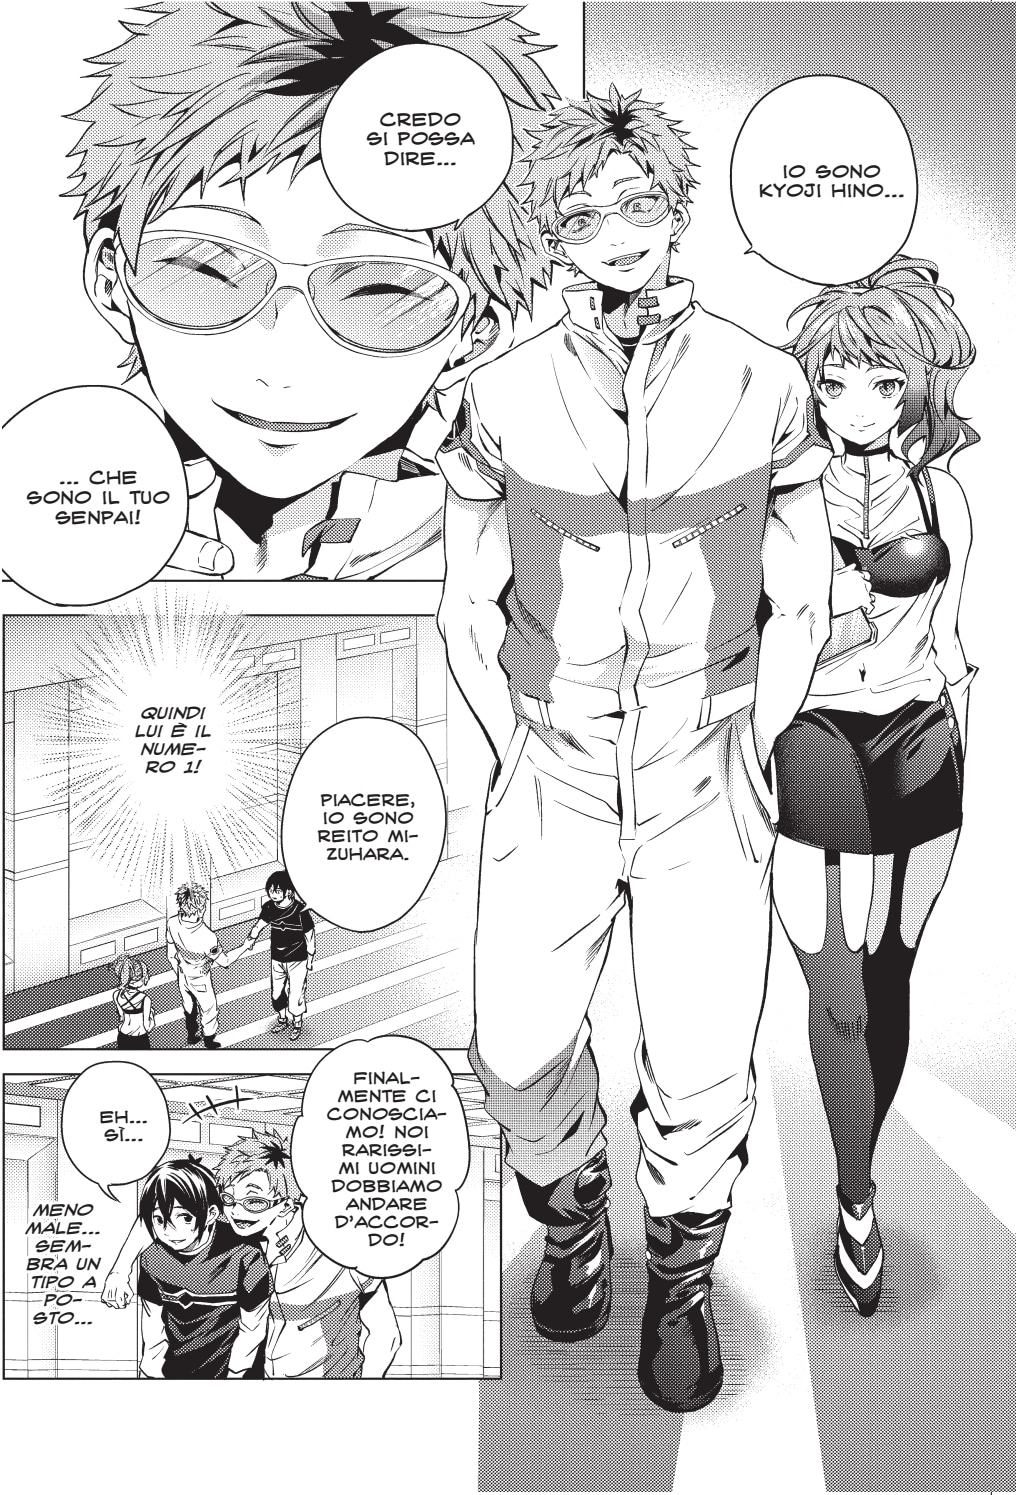 World’s End Harem manga screenshot